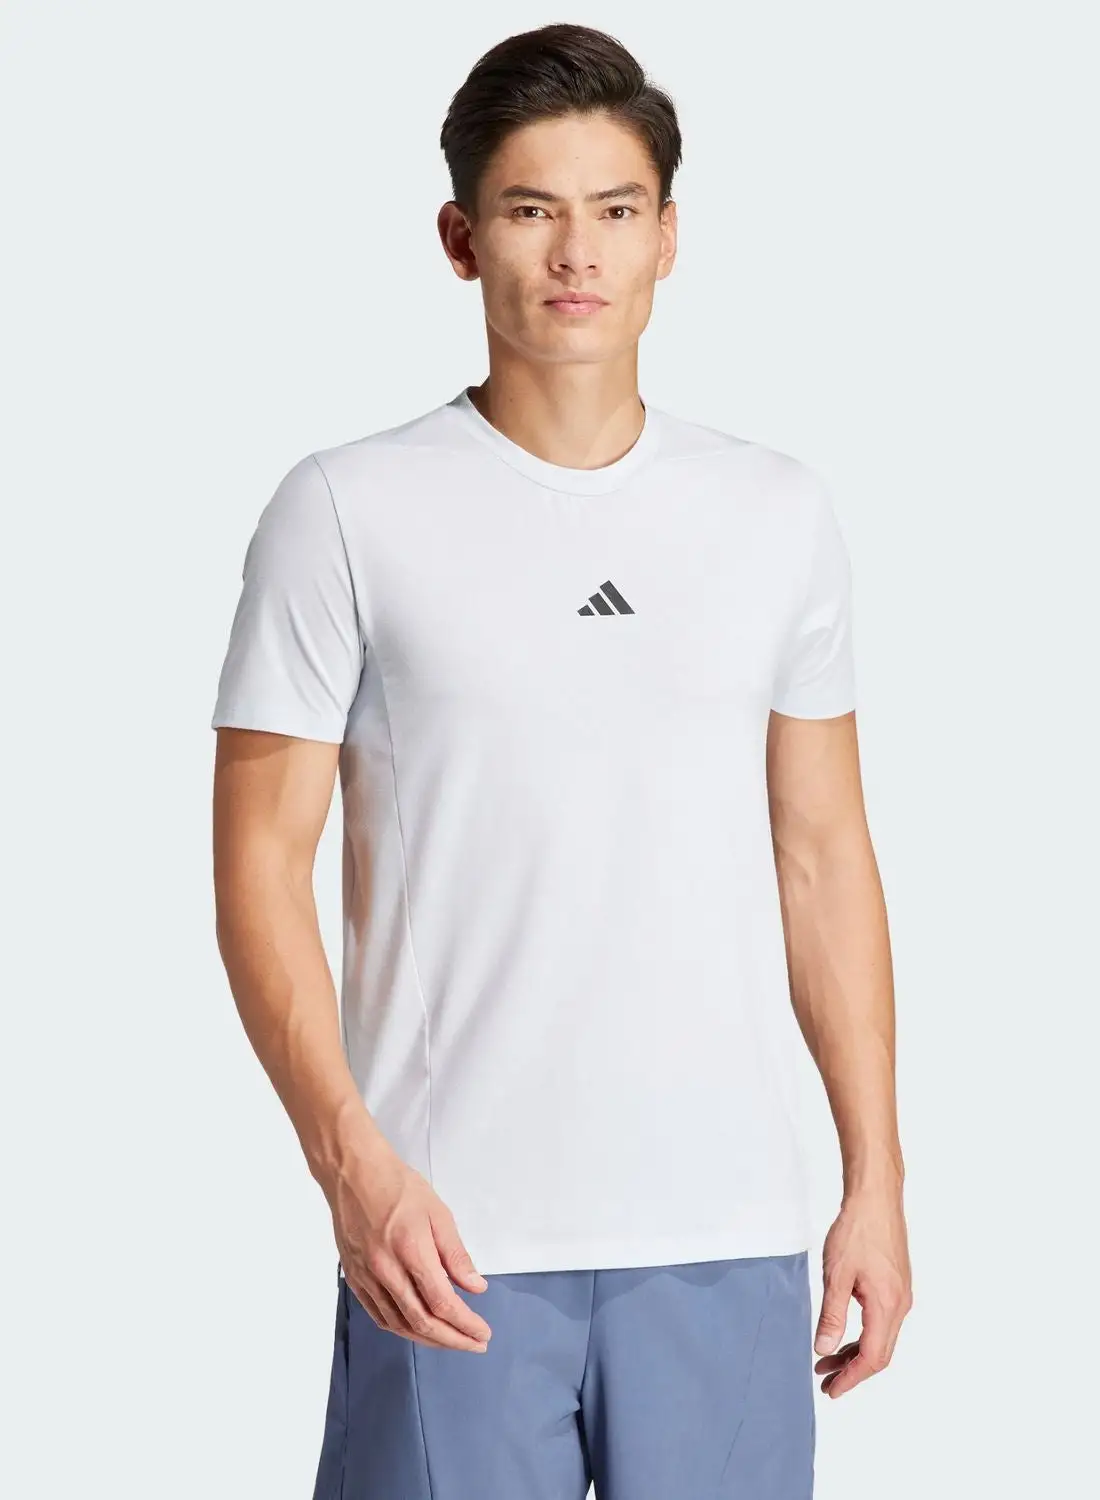 Adidas Designed For Training T-Shirt